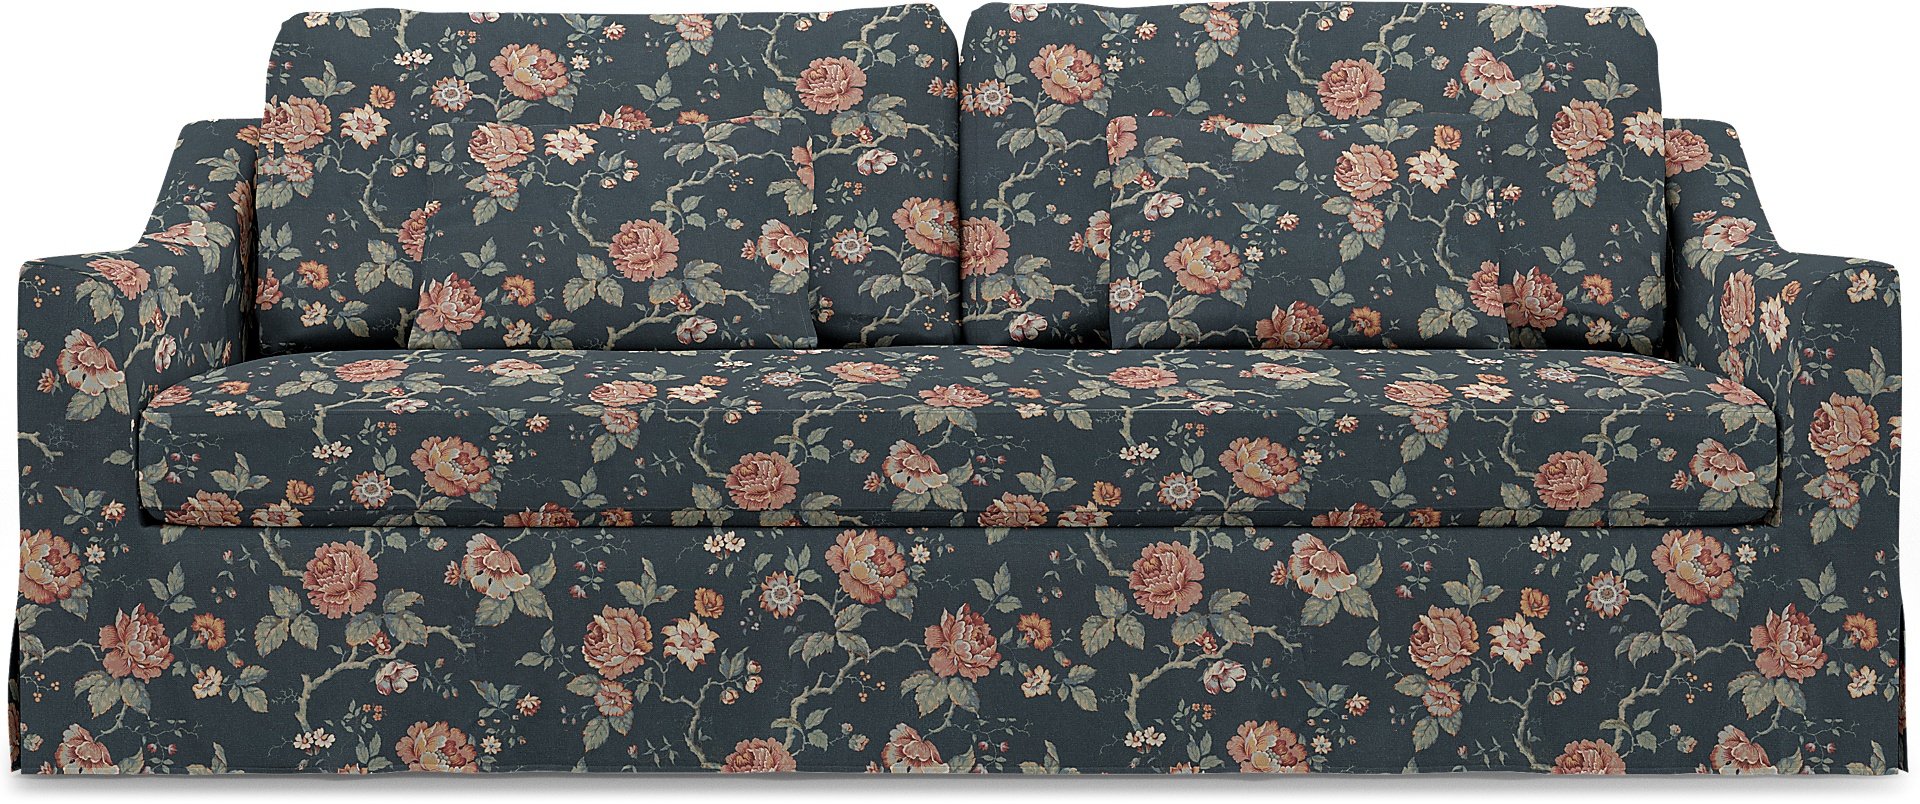 IKEA - Farlov 3 Seater Sofa Cover, Rosentrad Dark, BEMZ x BORASTAPETER COLLECTION - Bemz